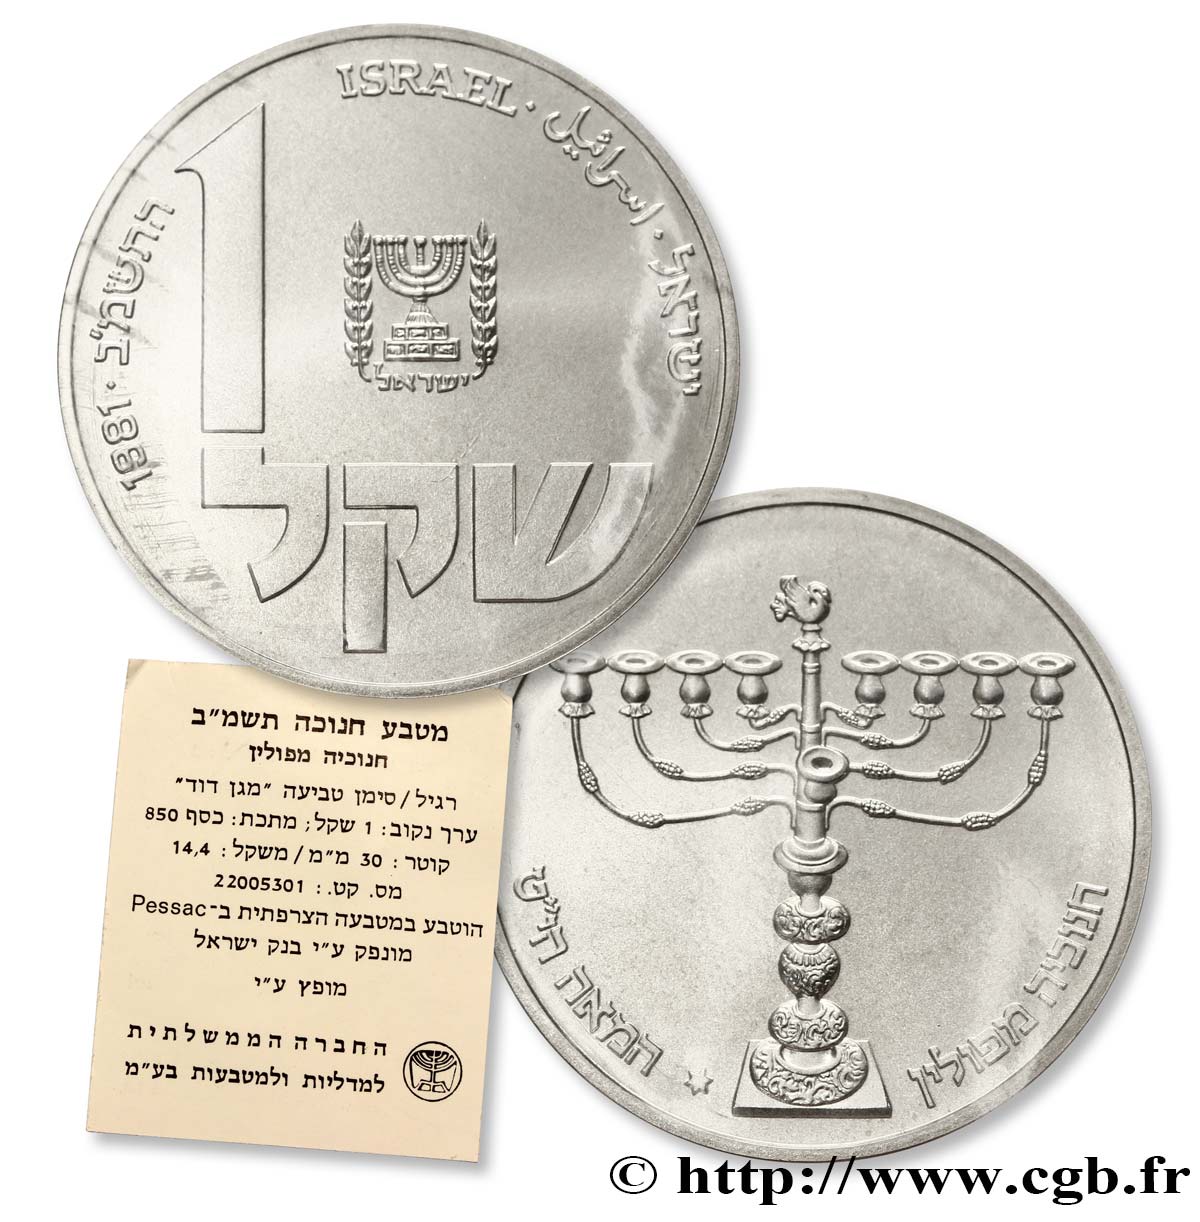 ISRAELE 1 Sheqel Hanukka - Lampe de Pologne an 5742 1981 Monnaie de Paris FDC 